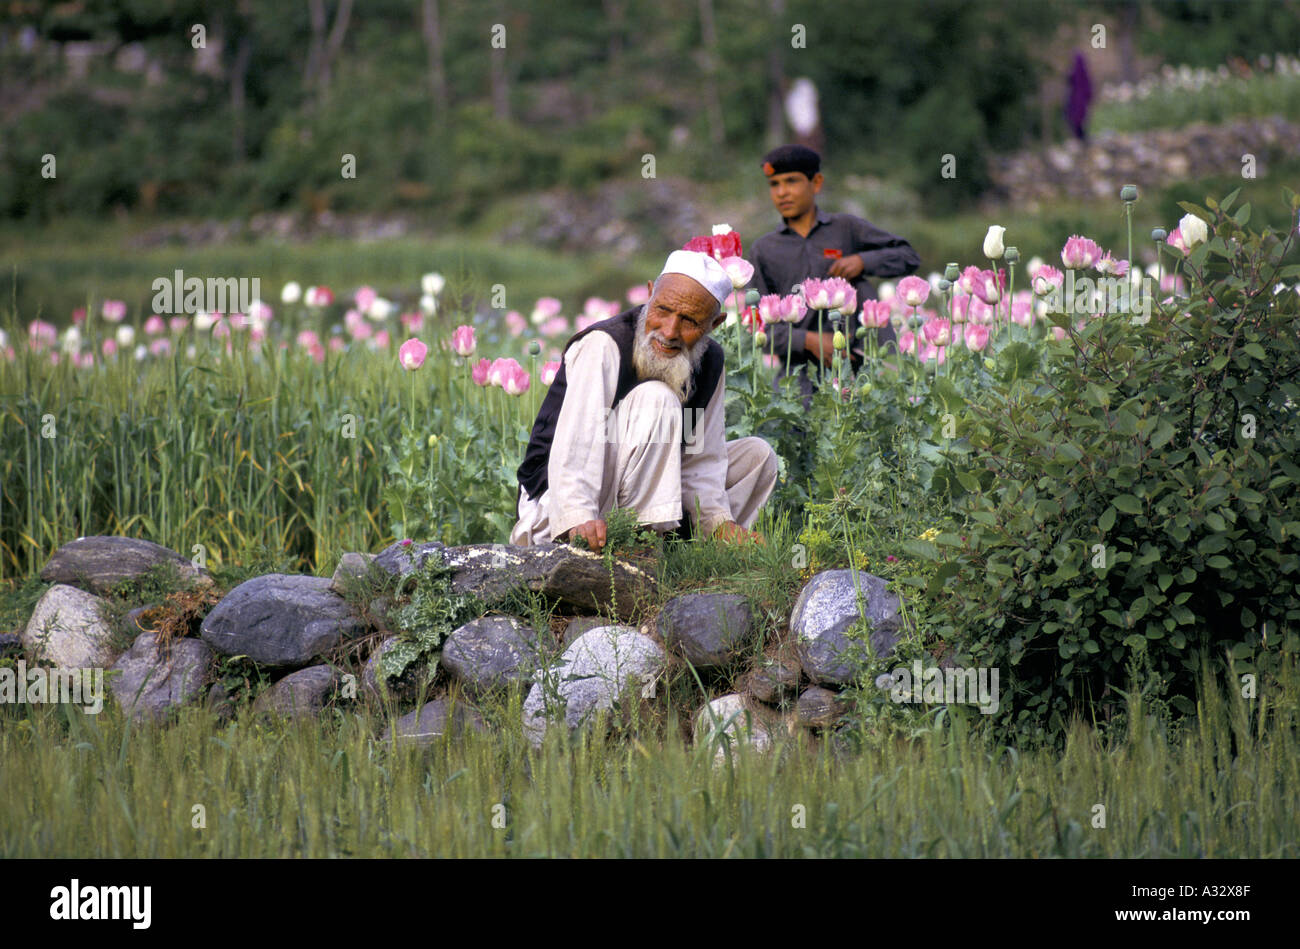 Men guard a bumper crop of flowering opium poppies, growing in fields along the Pakistan / Afghanistan border. Stock Photo